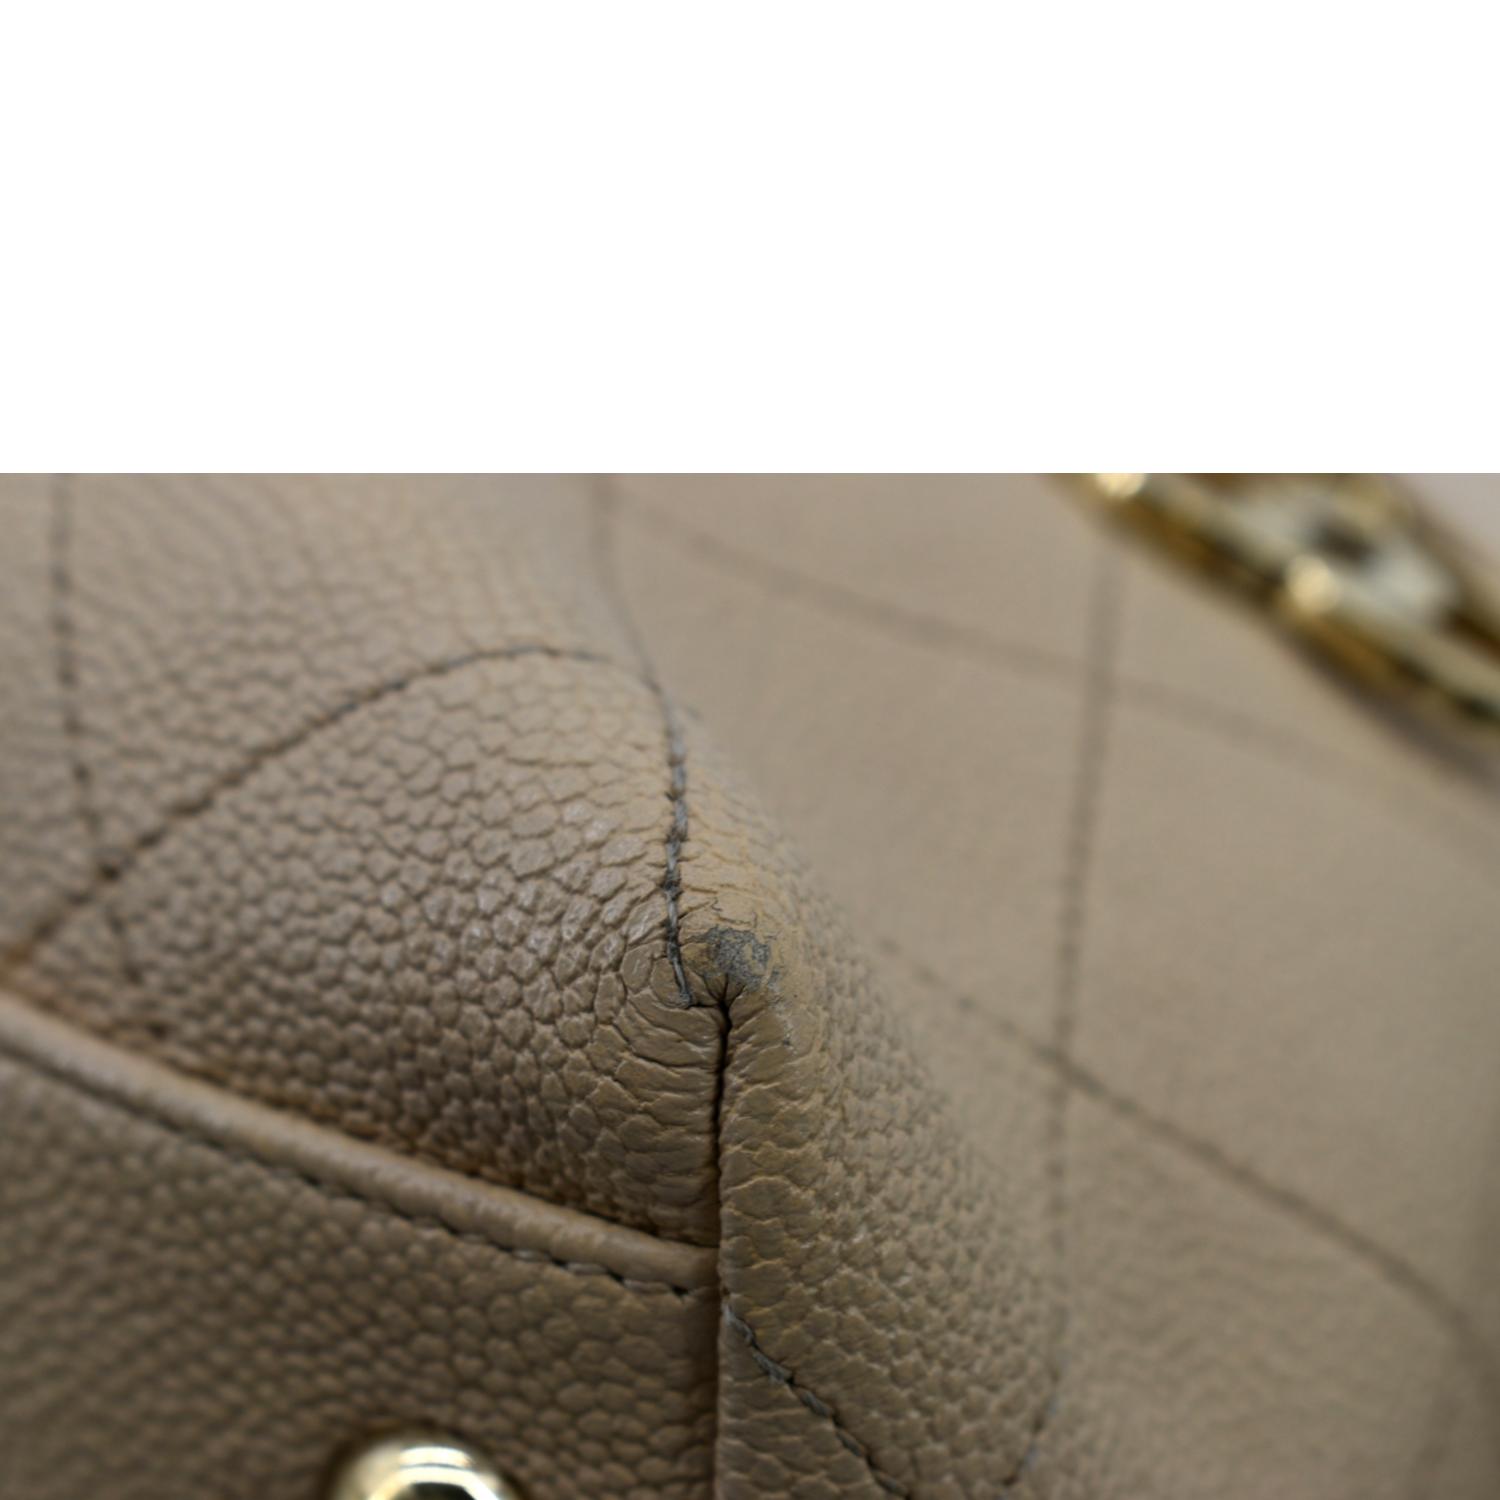 Small Mini Chanel Speedy Style Handbag in Grained Leather